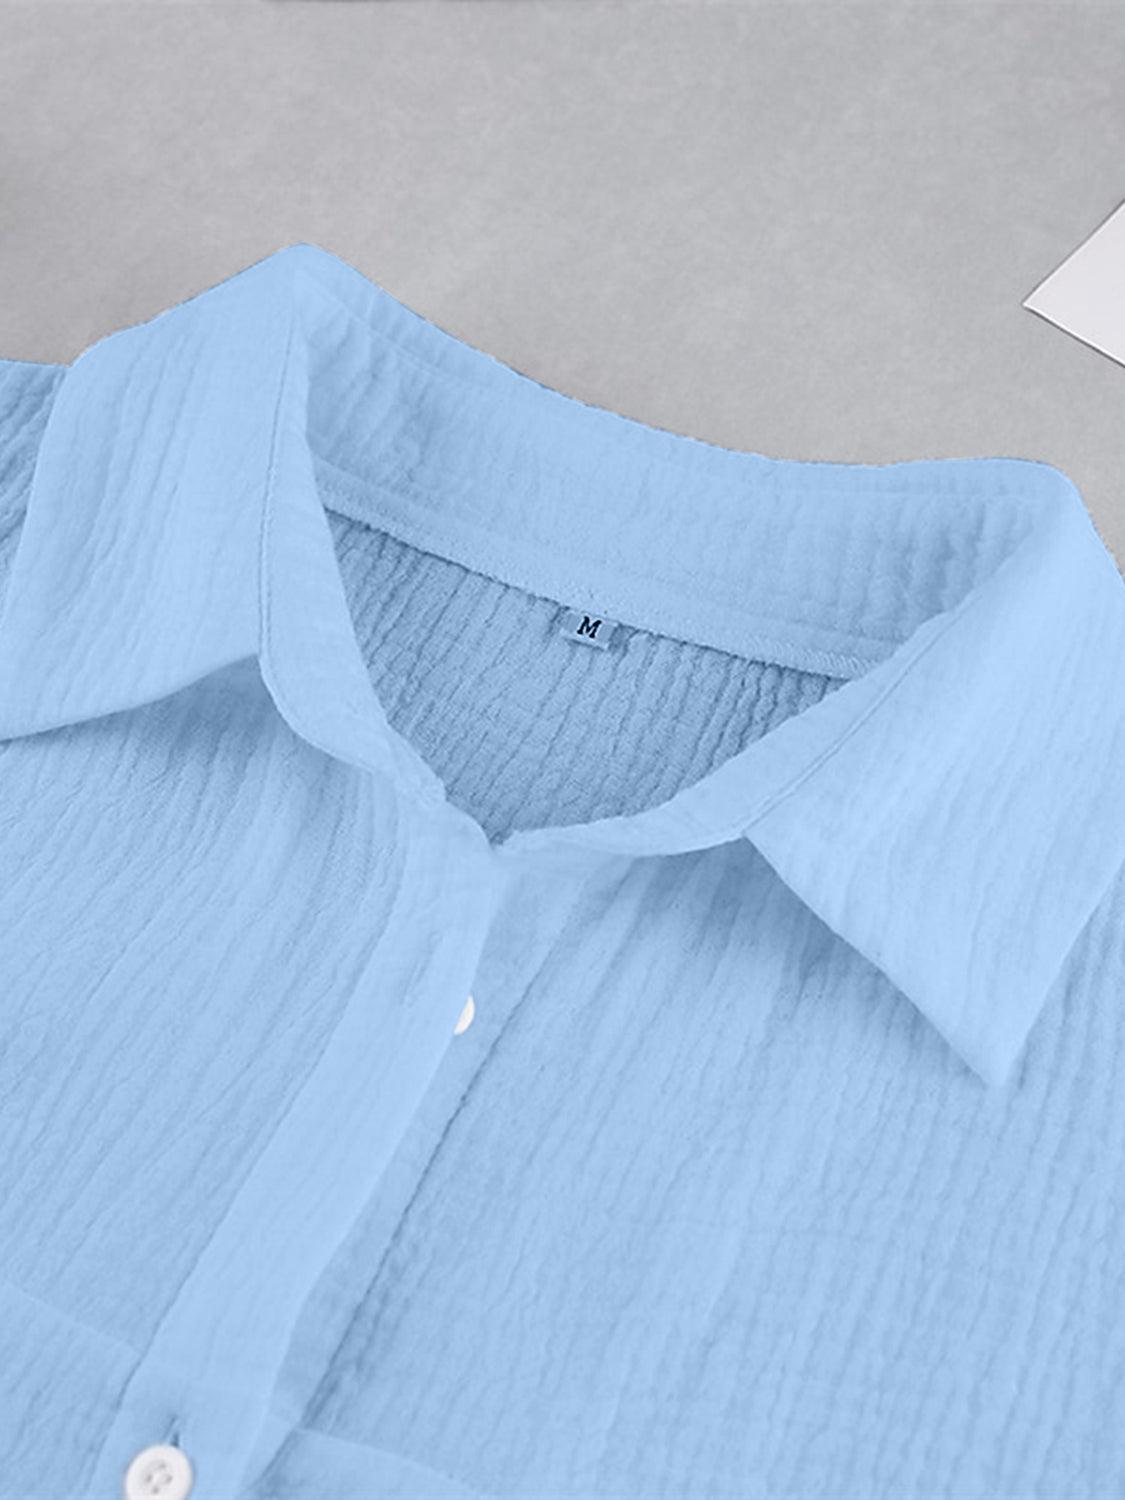 Texture Button Up Long Sleeve Shirt and Pants Set - Bona Fide Fashion